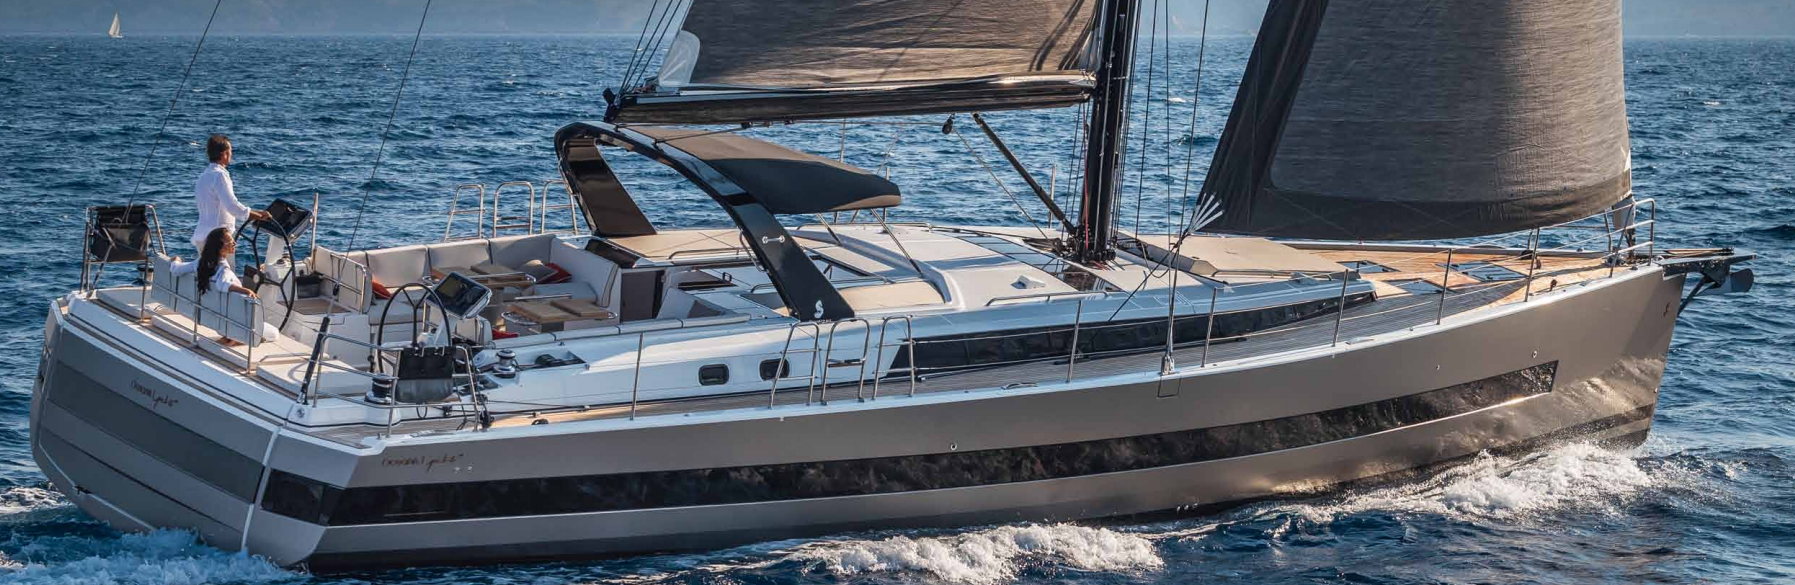 Oceanis Yacht 62 Onyx